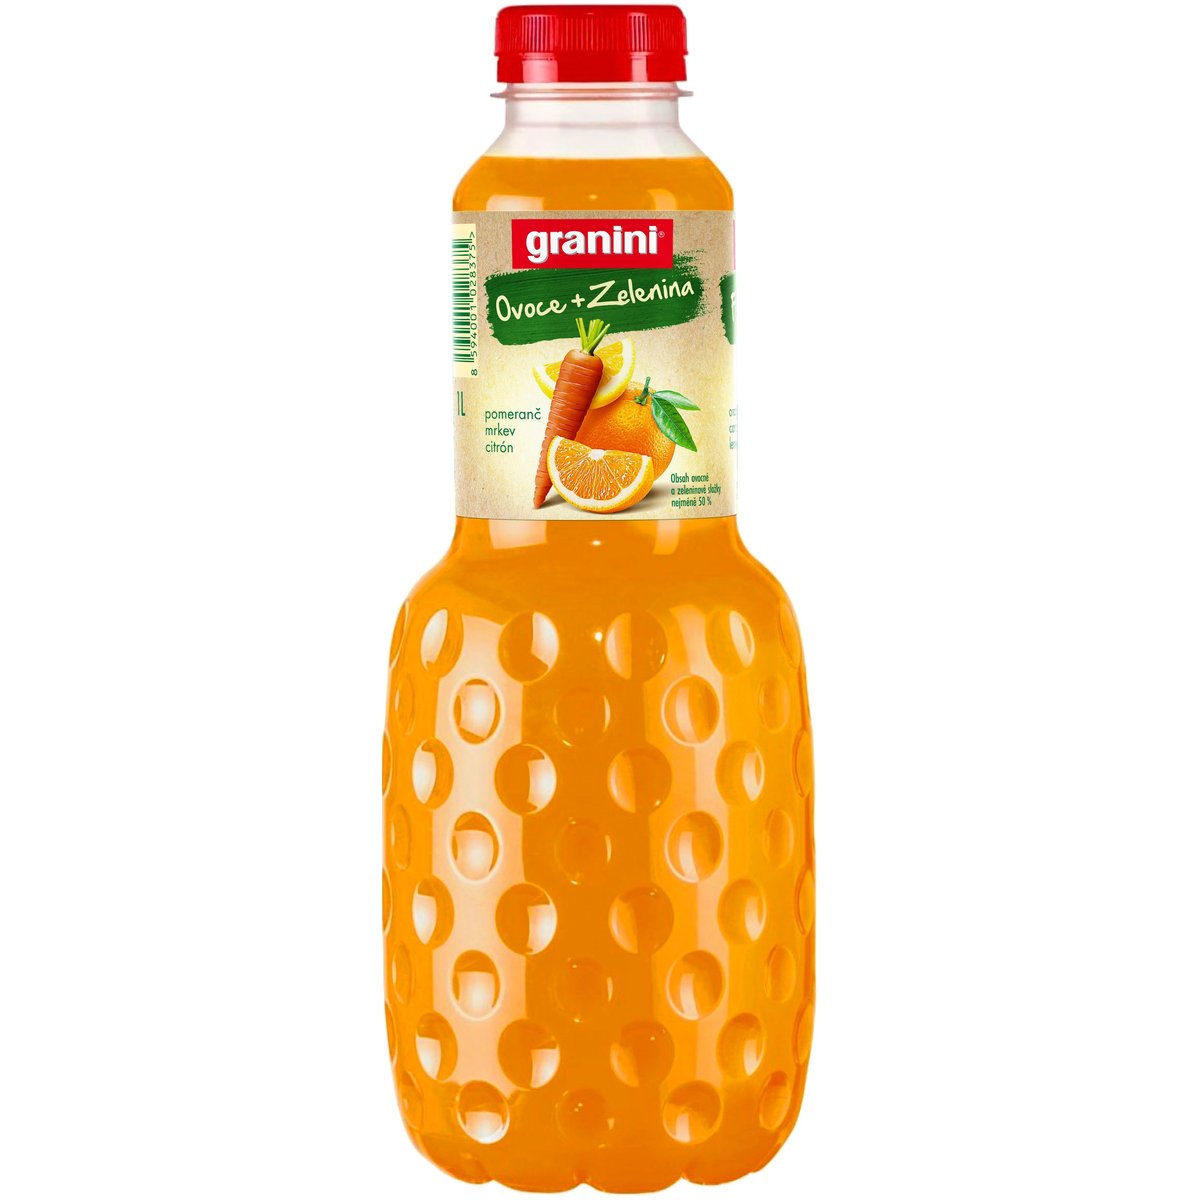 Granini pomeranč, mrkev